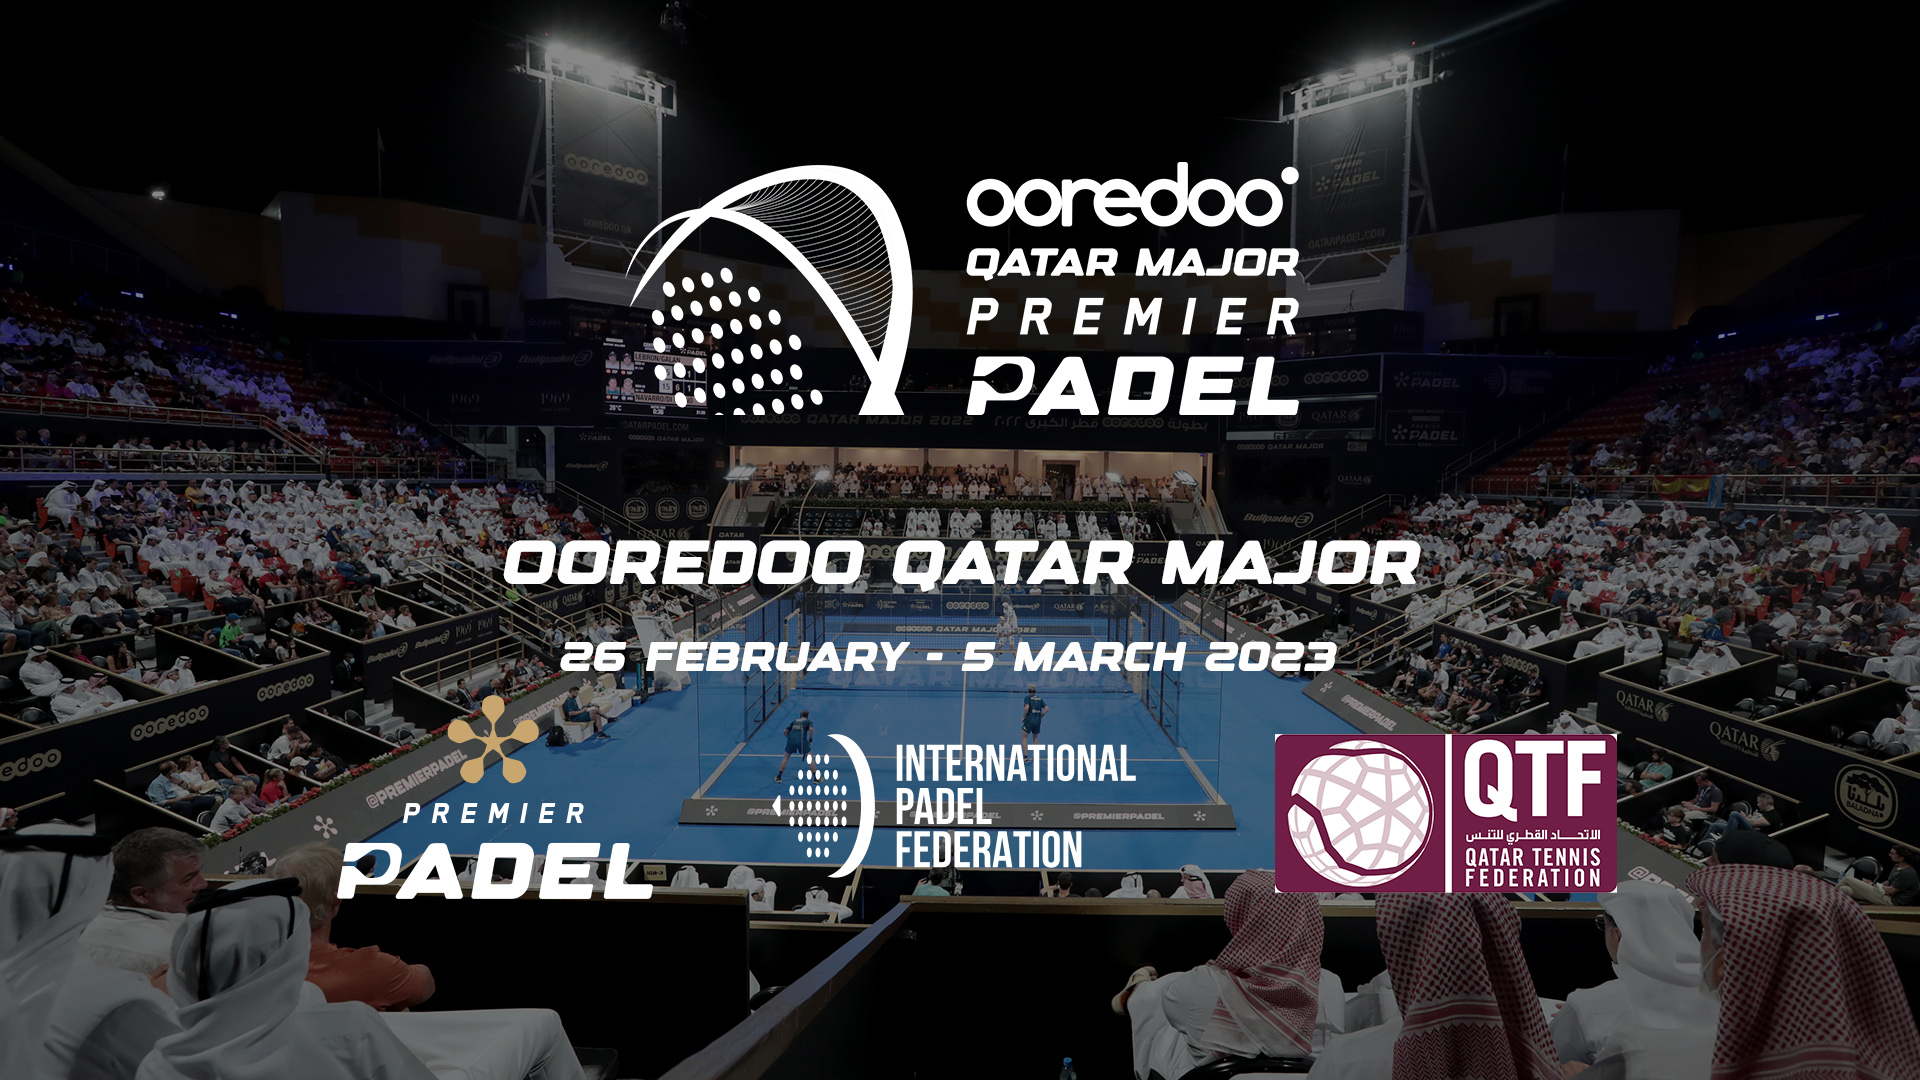 Premier Padel – Ooredoo Qatar Major 2023 w Doha od 26 lutego do 5 marca!